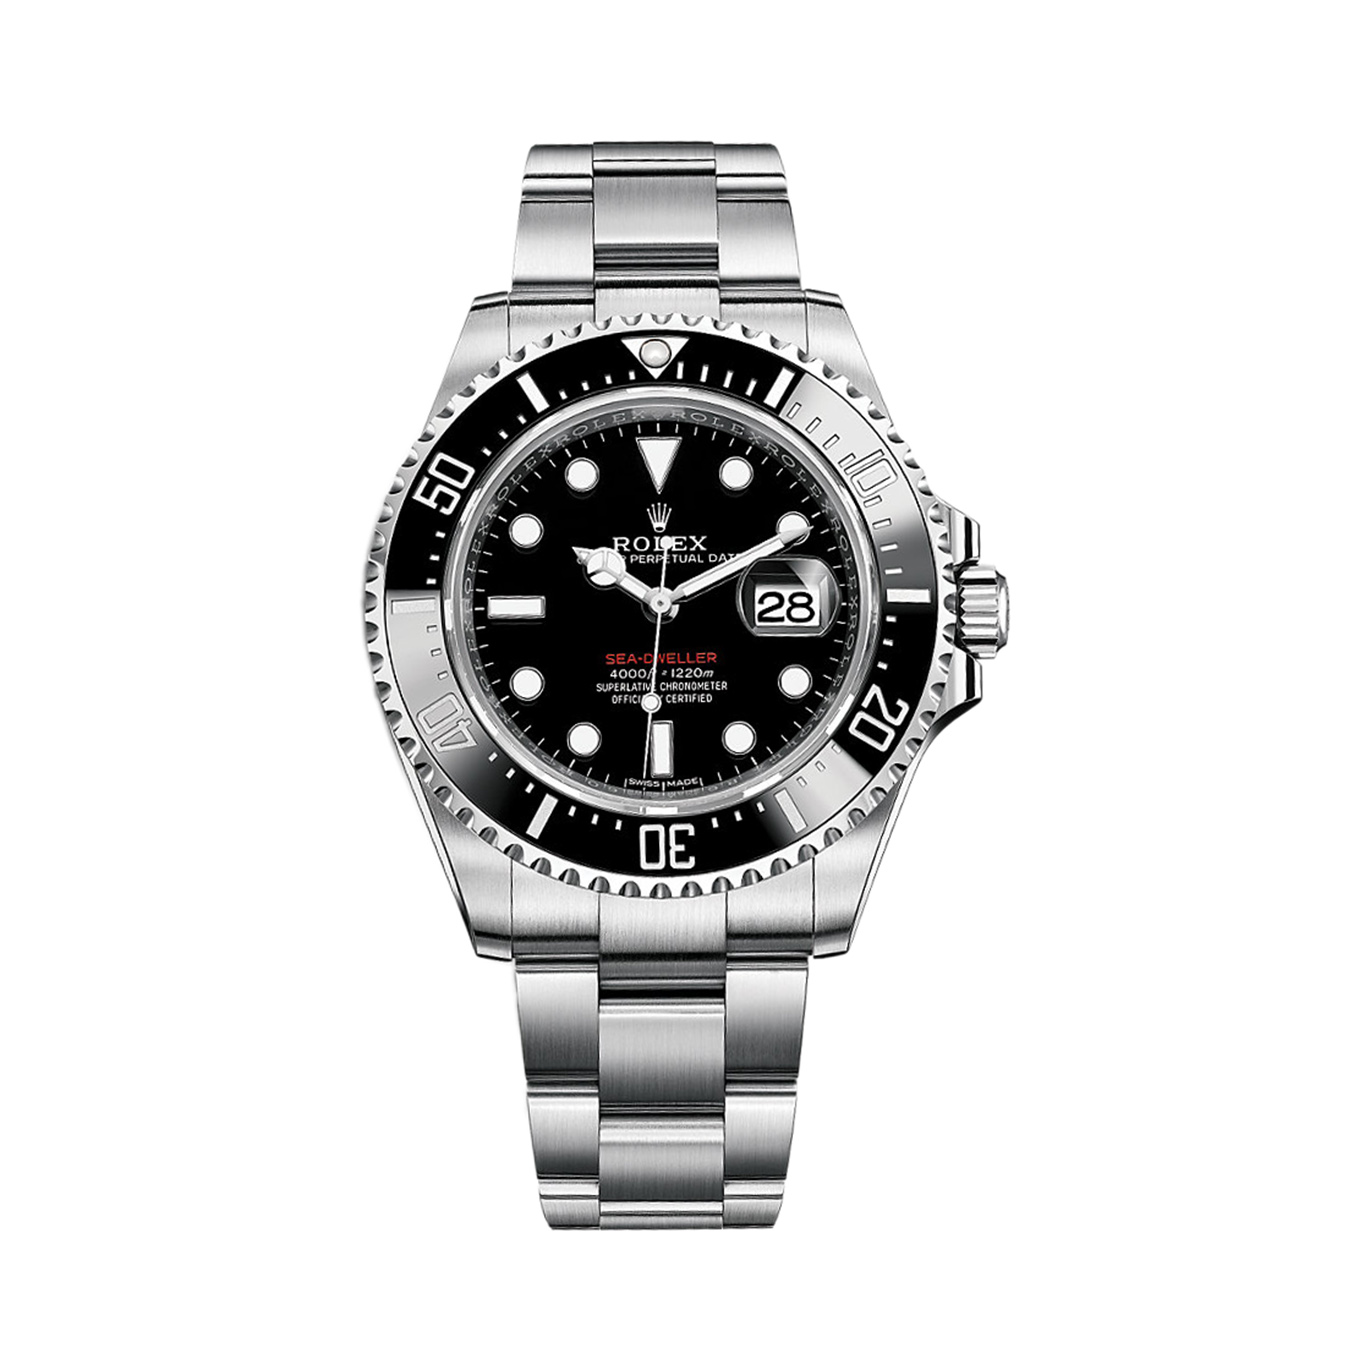 Sea-Dweller 126600 Stainless Steel Watch (Black)